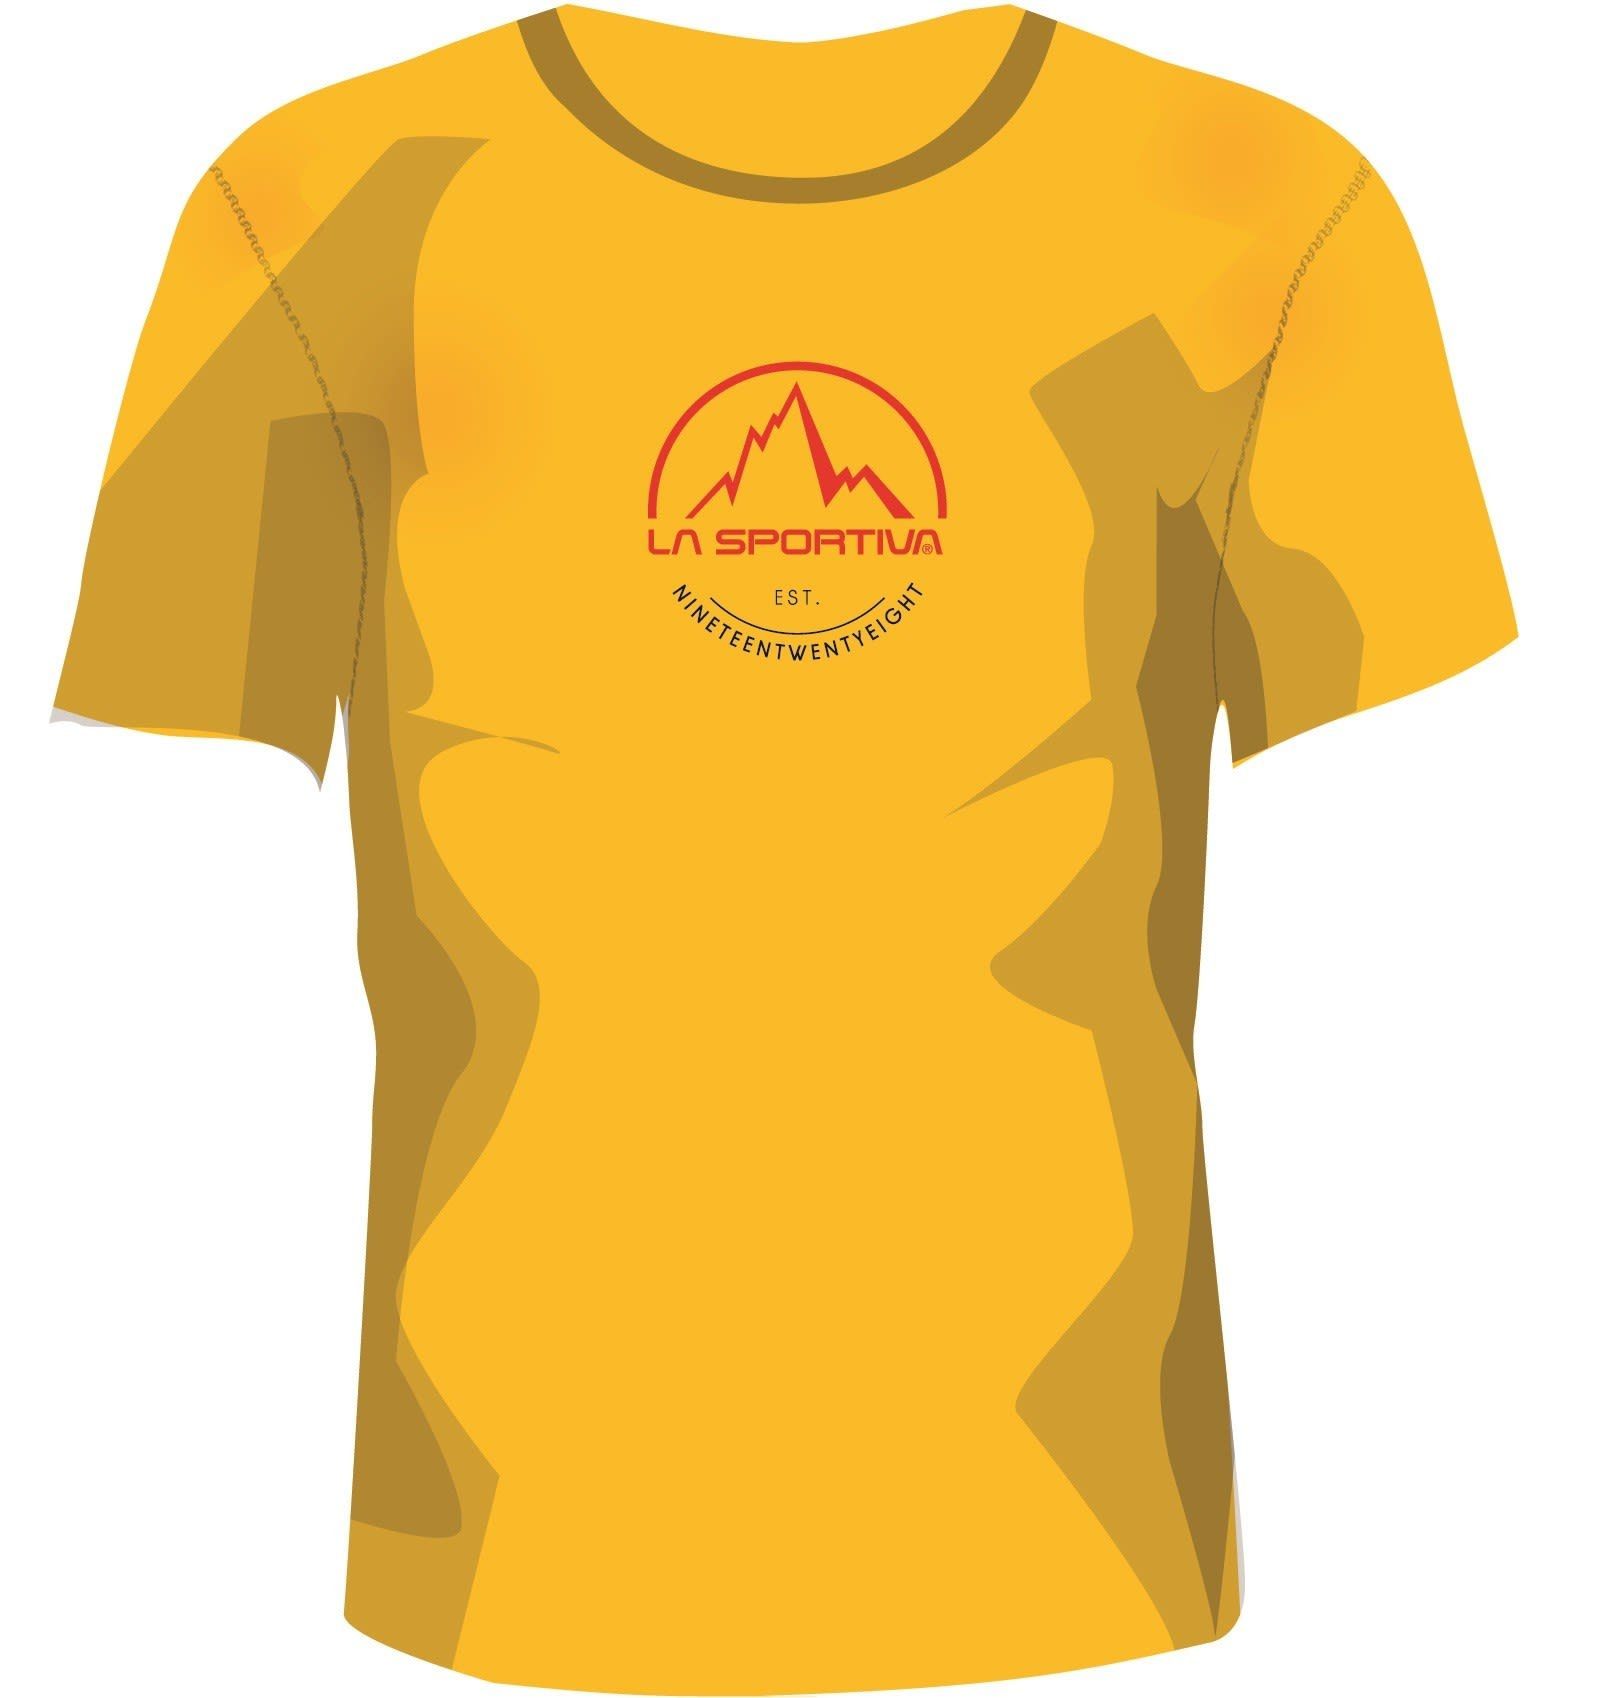 La Sportiva T-Shirt Tee La M Sportiva Gelb Herren Logo Kurzarm-Shirt